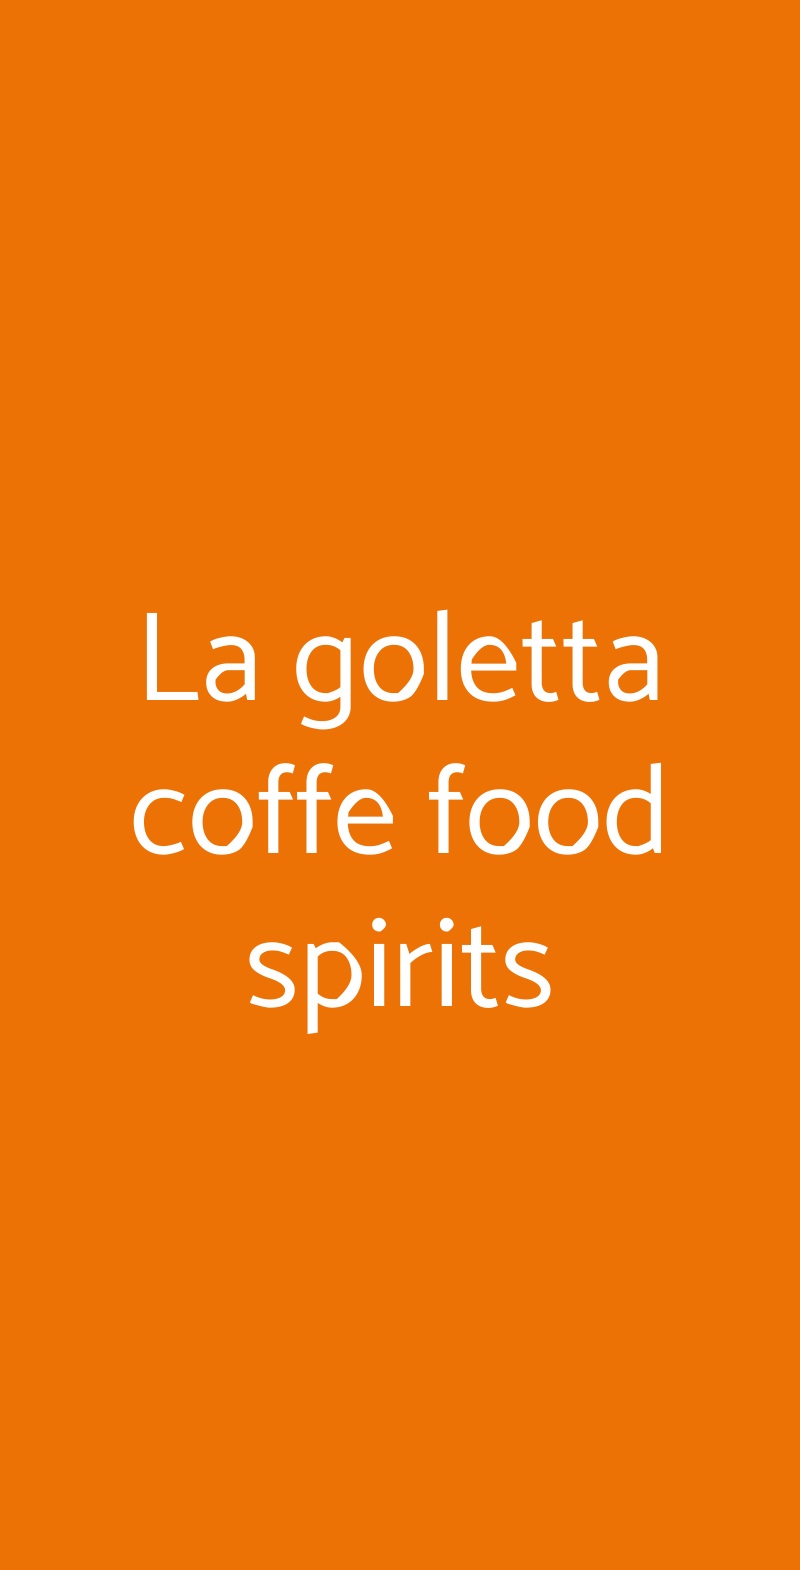 La goletta coffe food spirits Genova menù 1 pagina